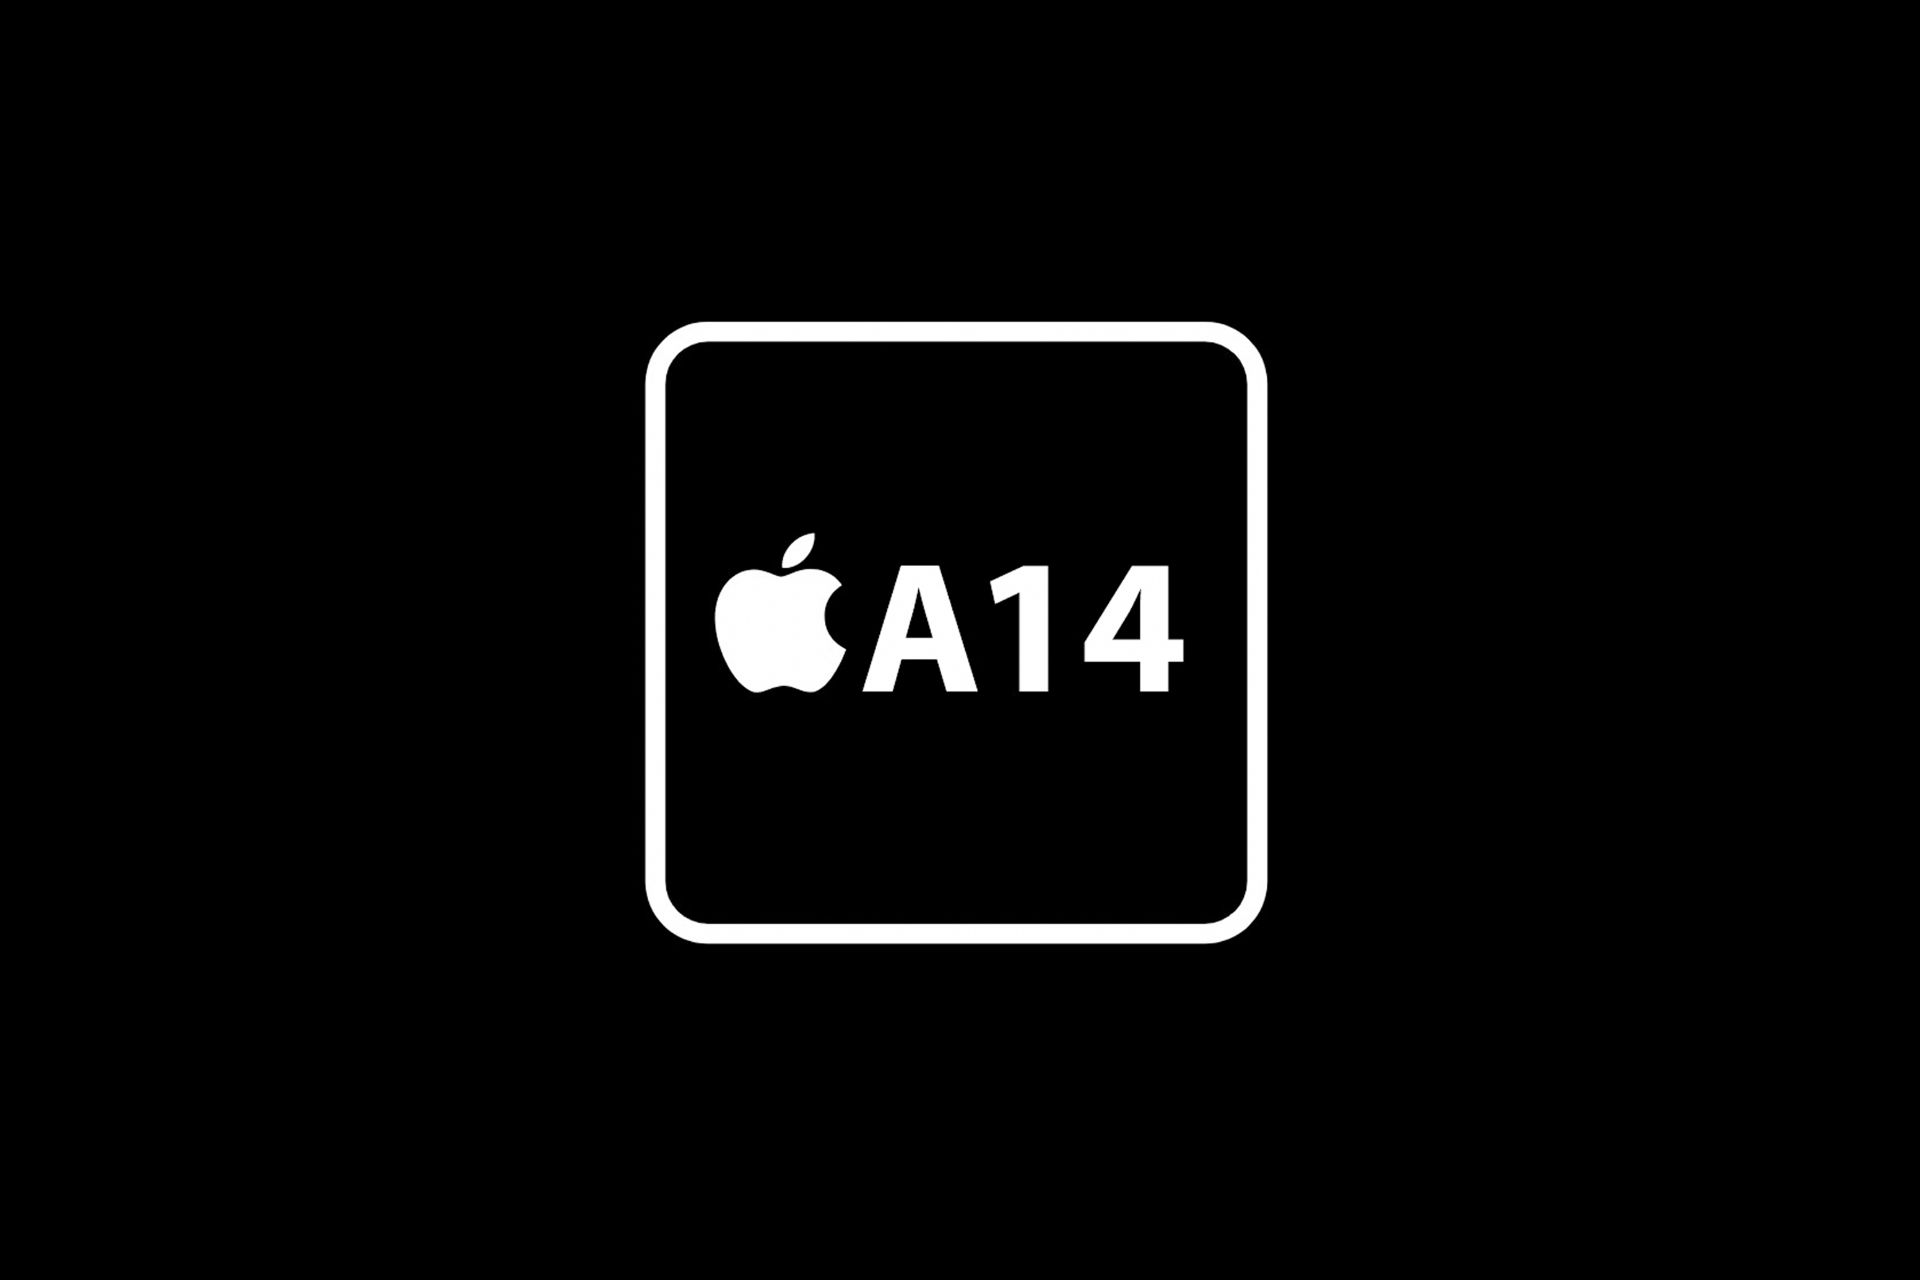 مرجع متخصصين ايران لوگو اي 14 بايونيك اپل / Apple A14 Bionic